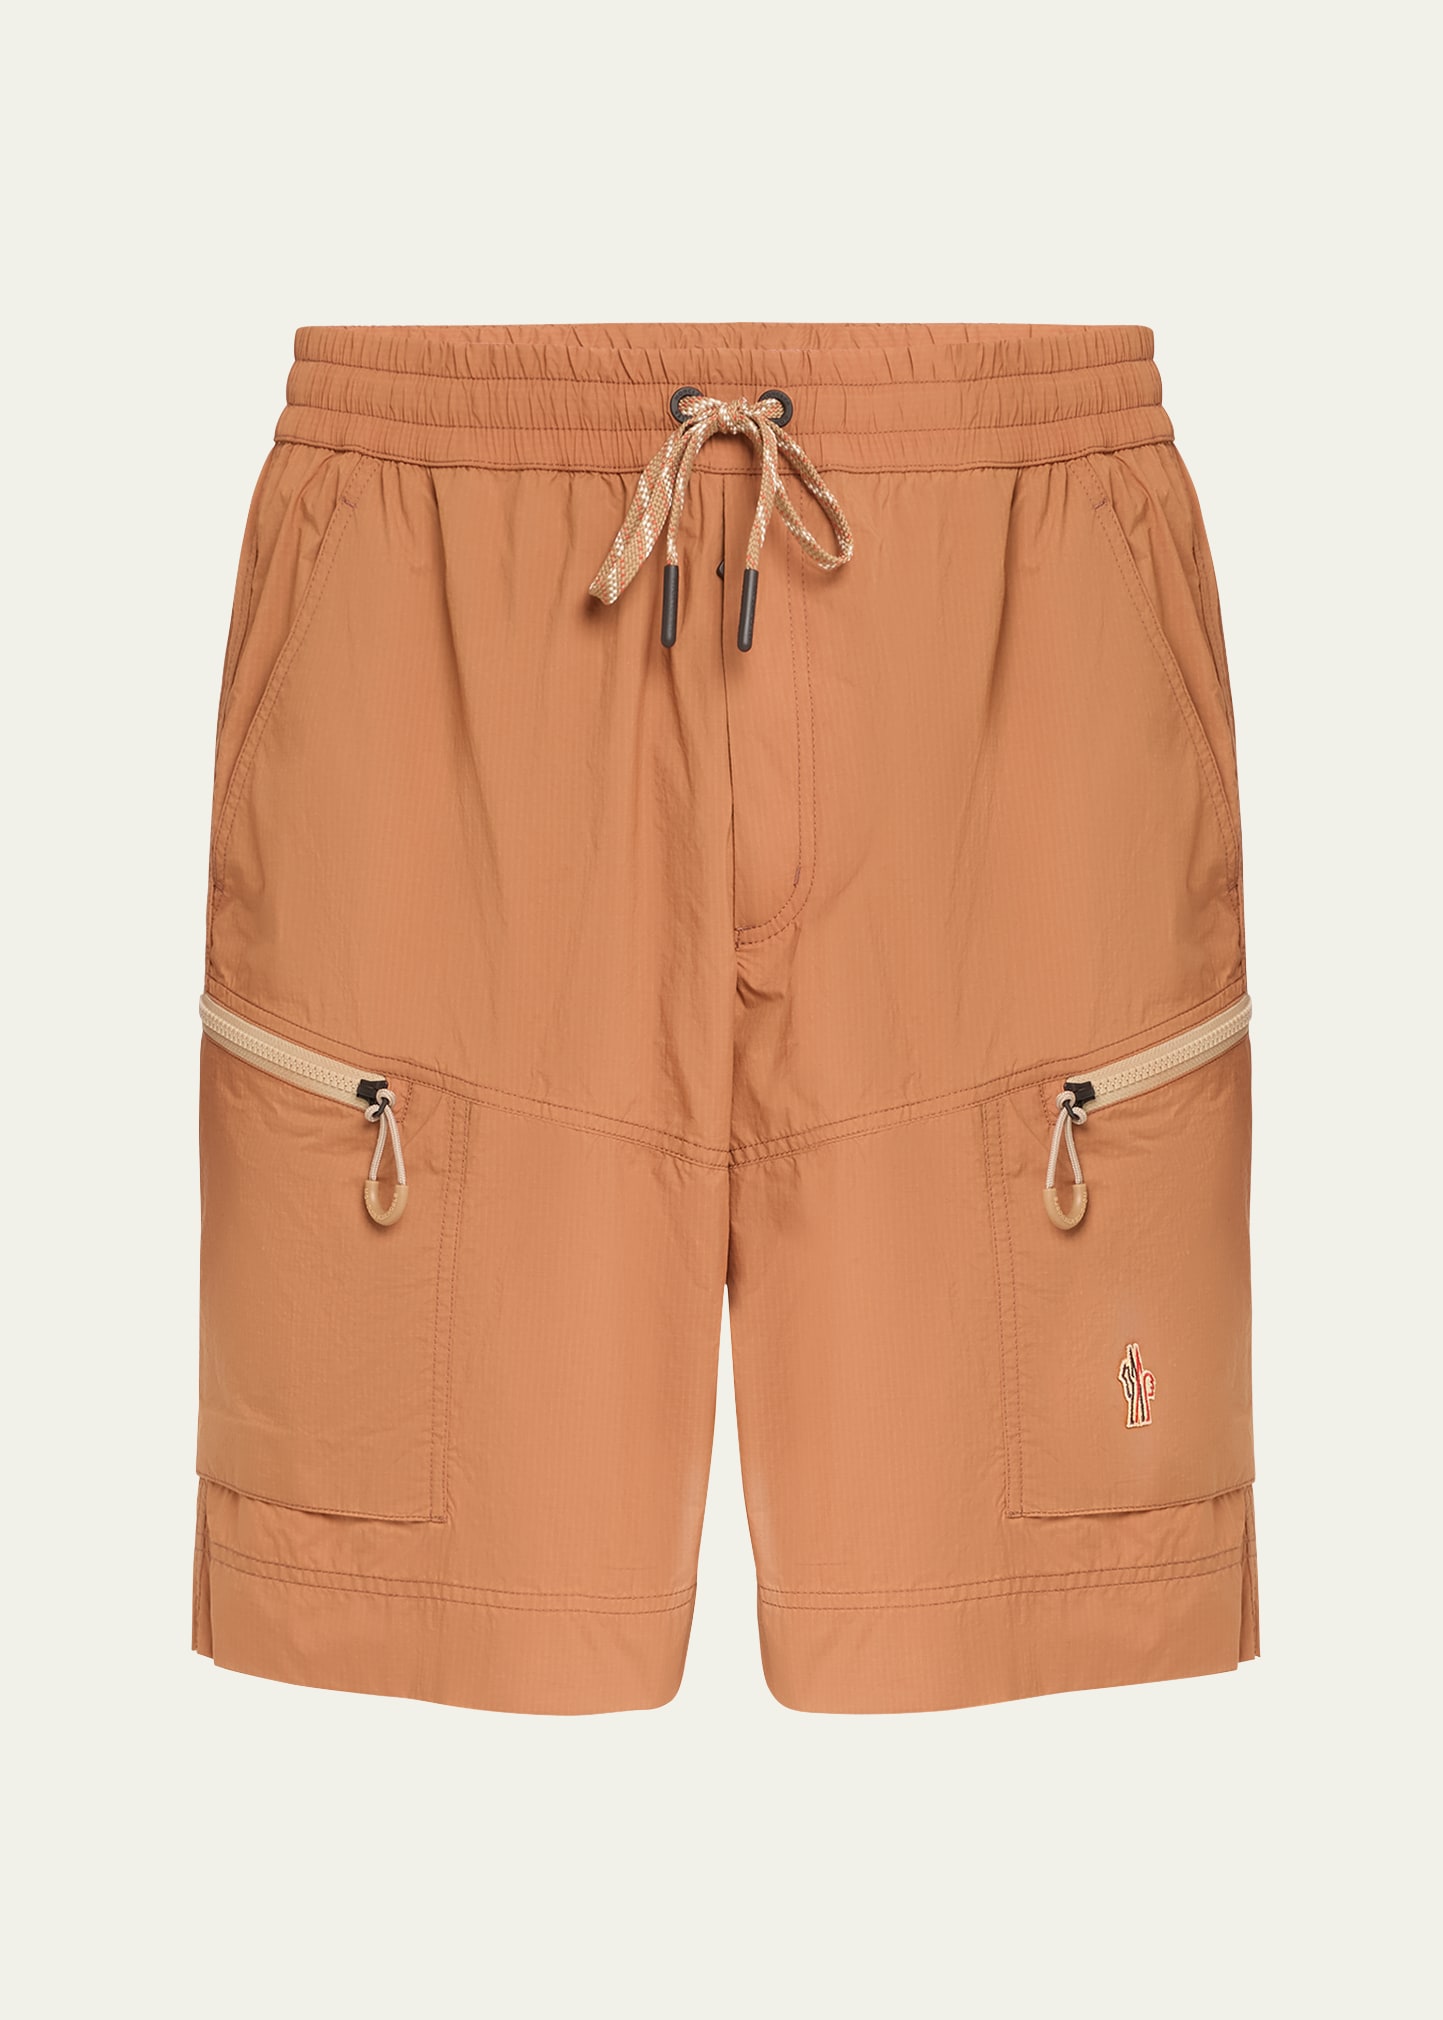 Men's Nylon Ripstop Cargo Shorts